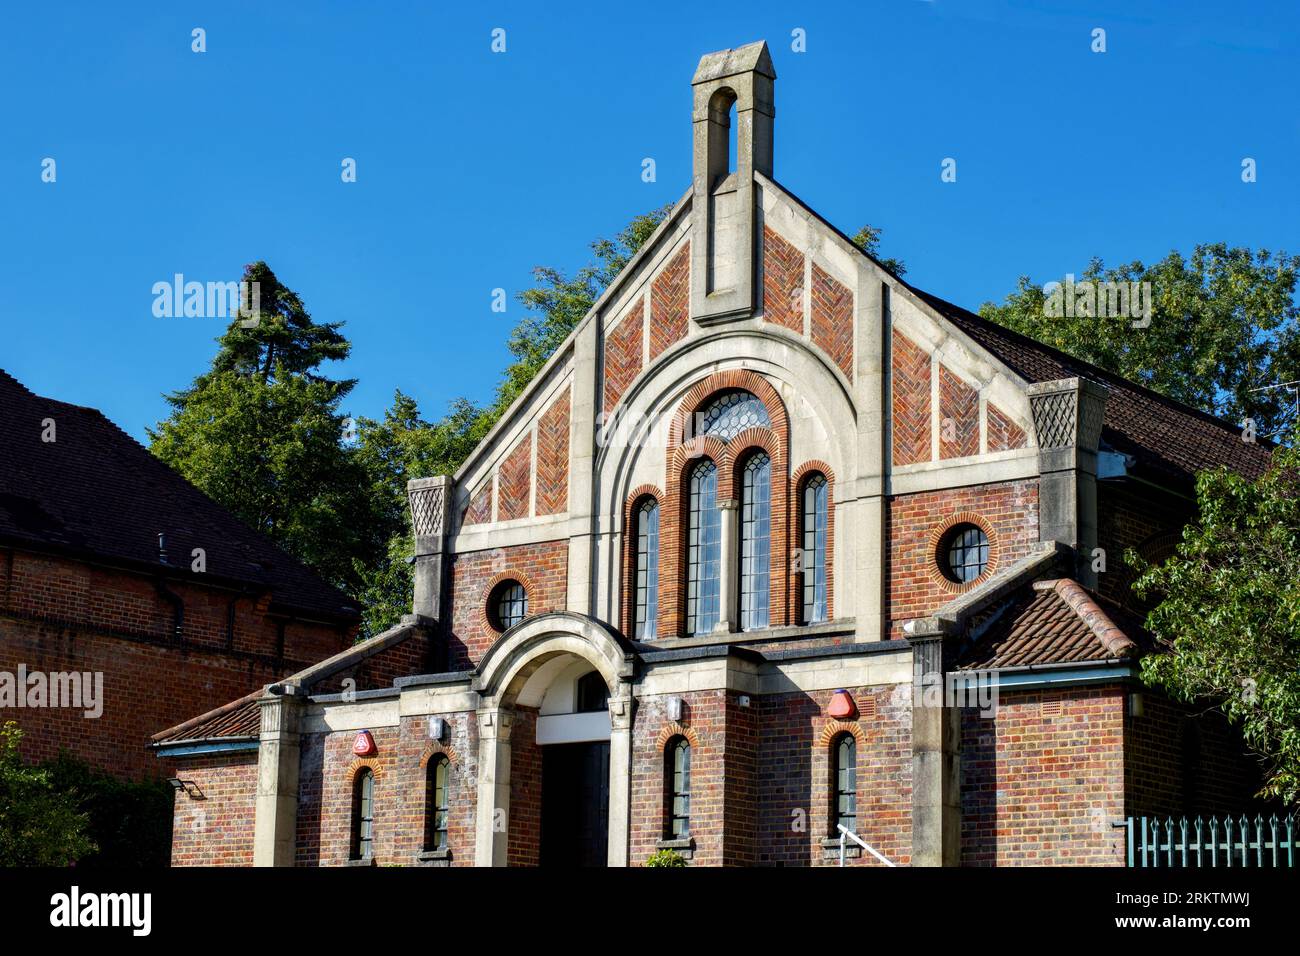 Radlett Reform Synagogue, Radlett, Hertfordshire, Angleterre, Royaume-Uni Banque D'Images